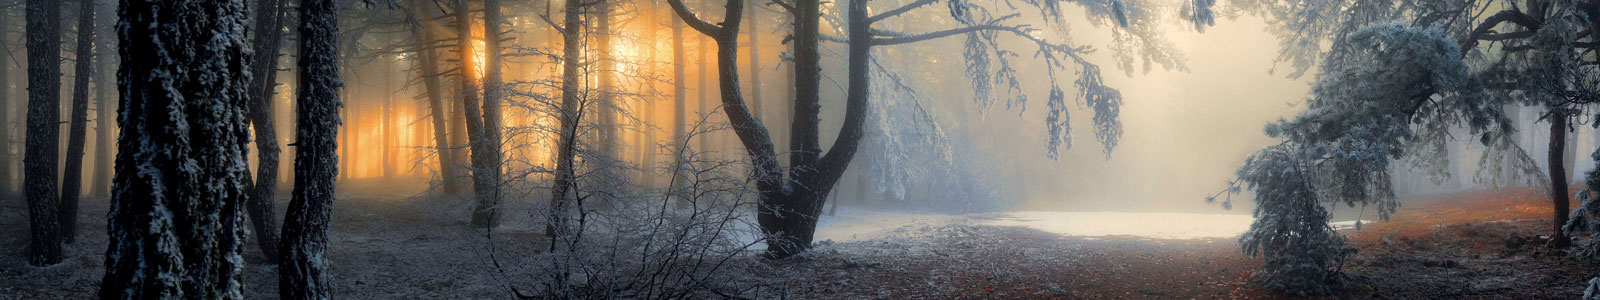 №4875 - Туманный лес на рассвете